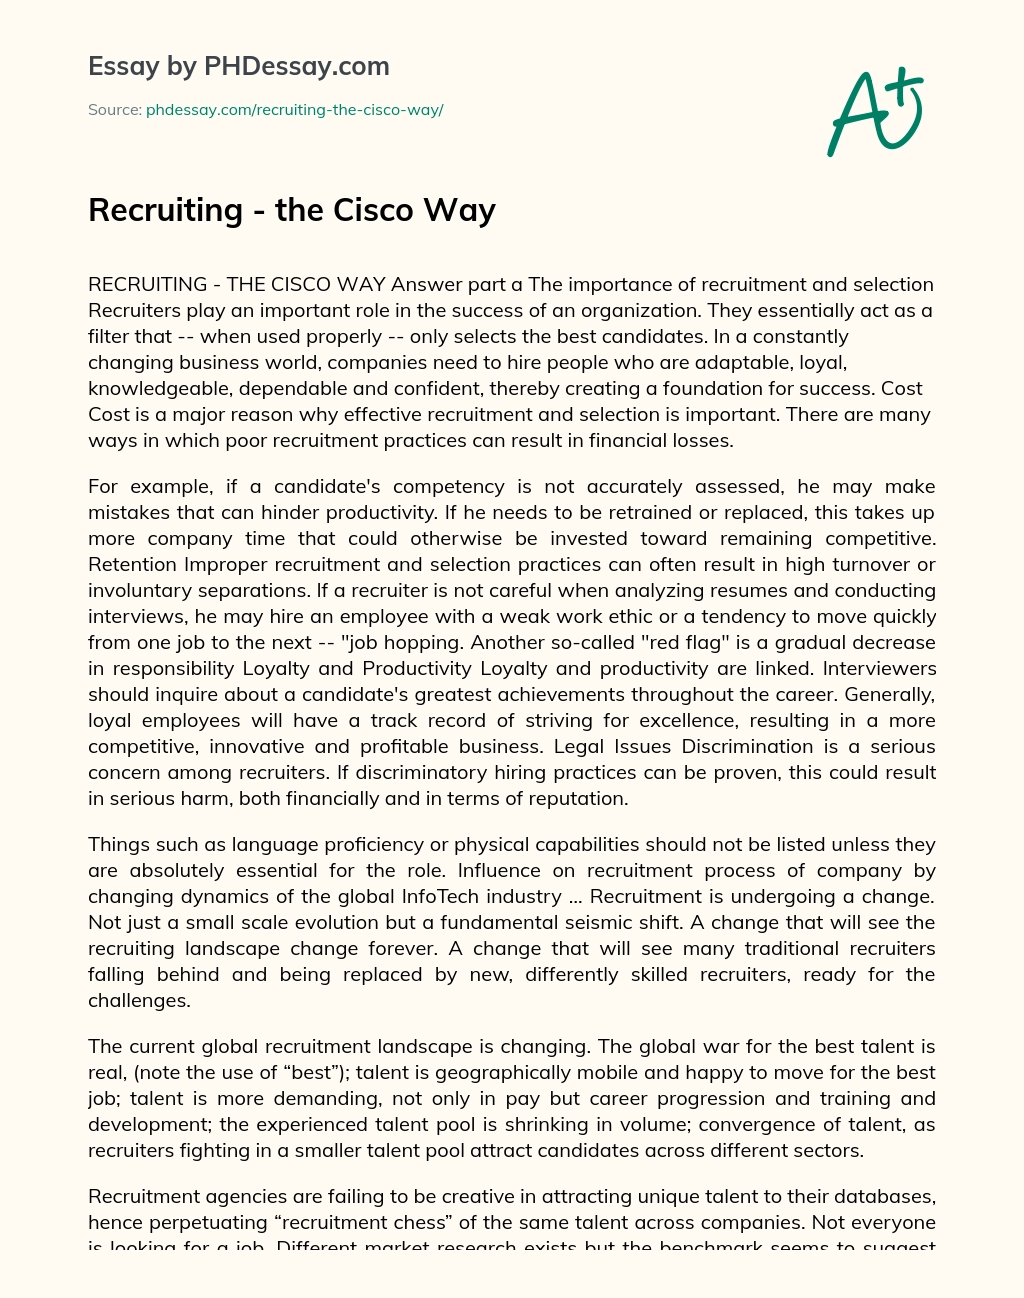 Recruiting – the Cisco Way essay